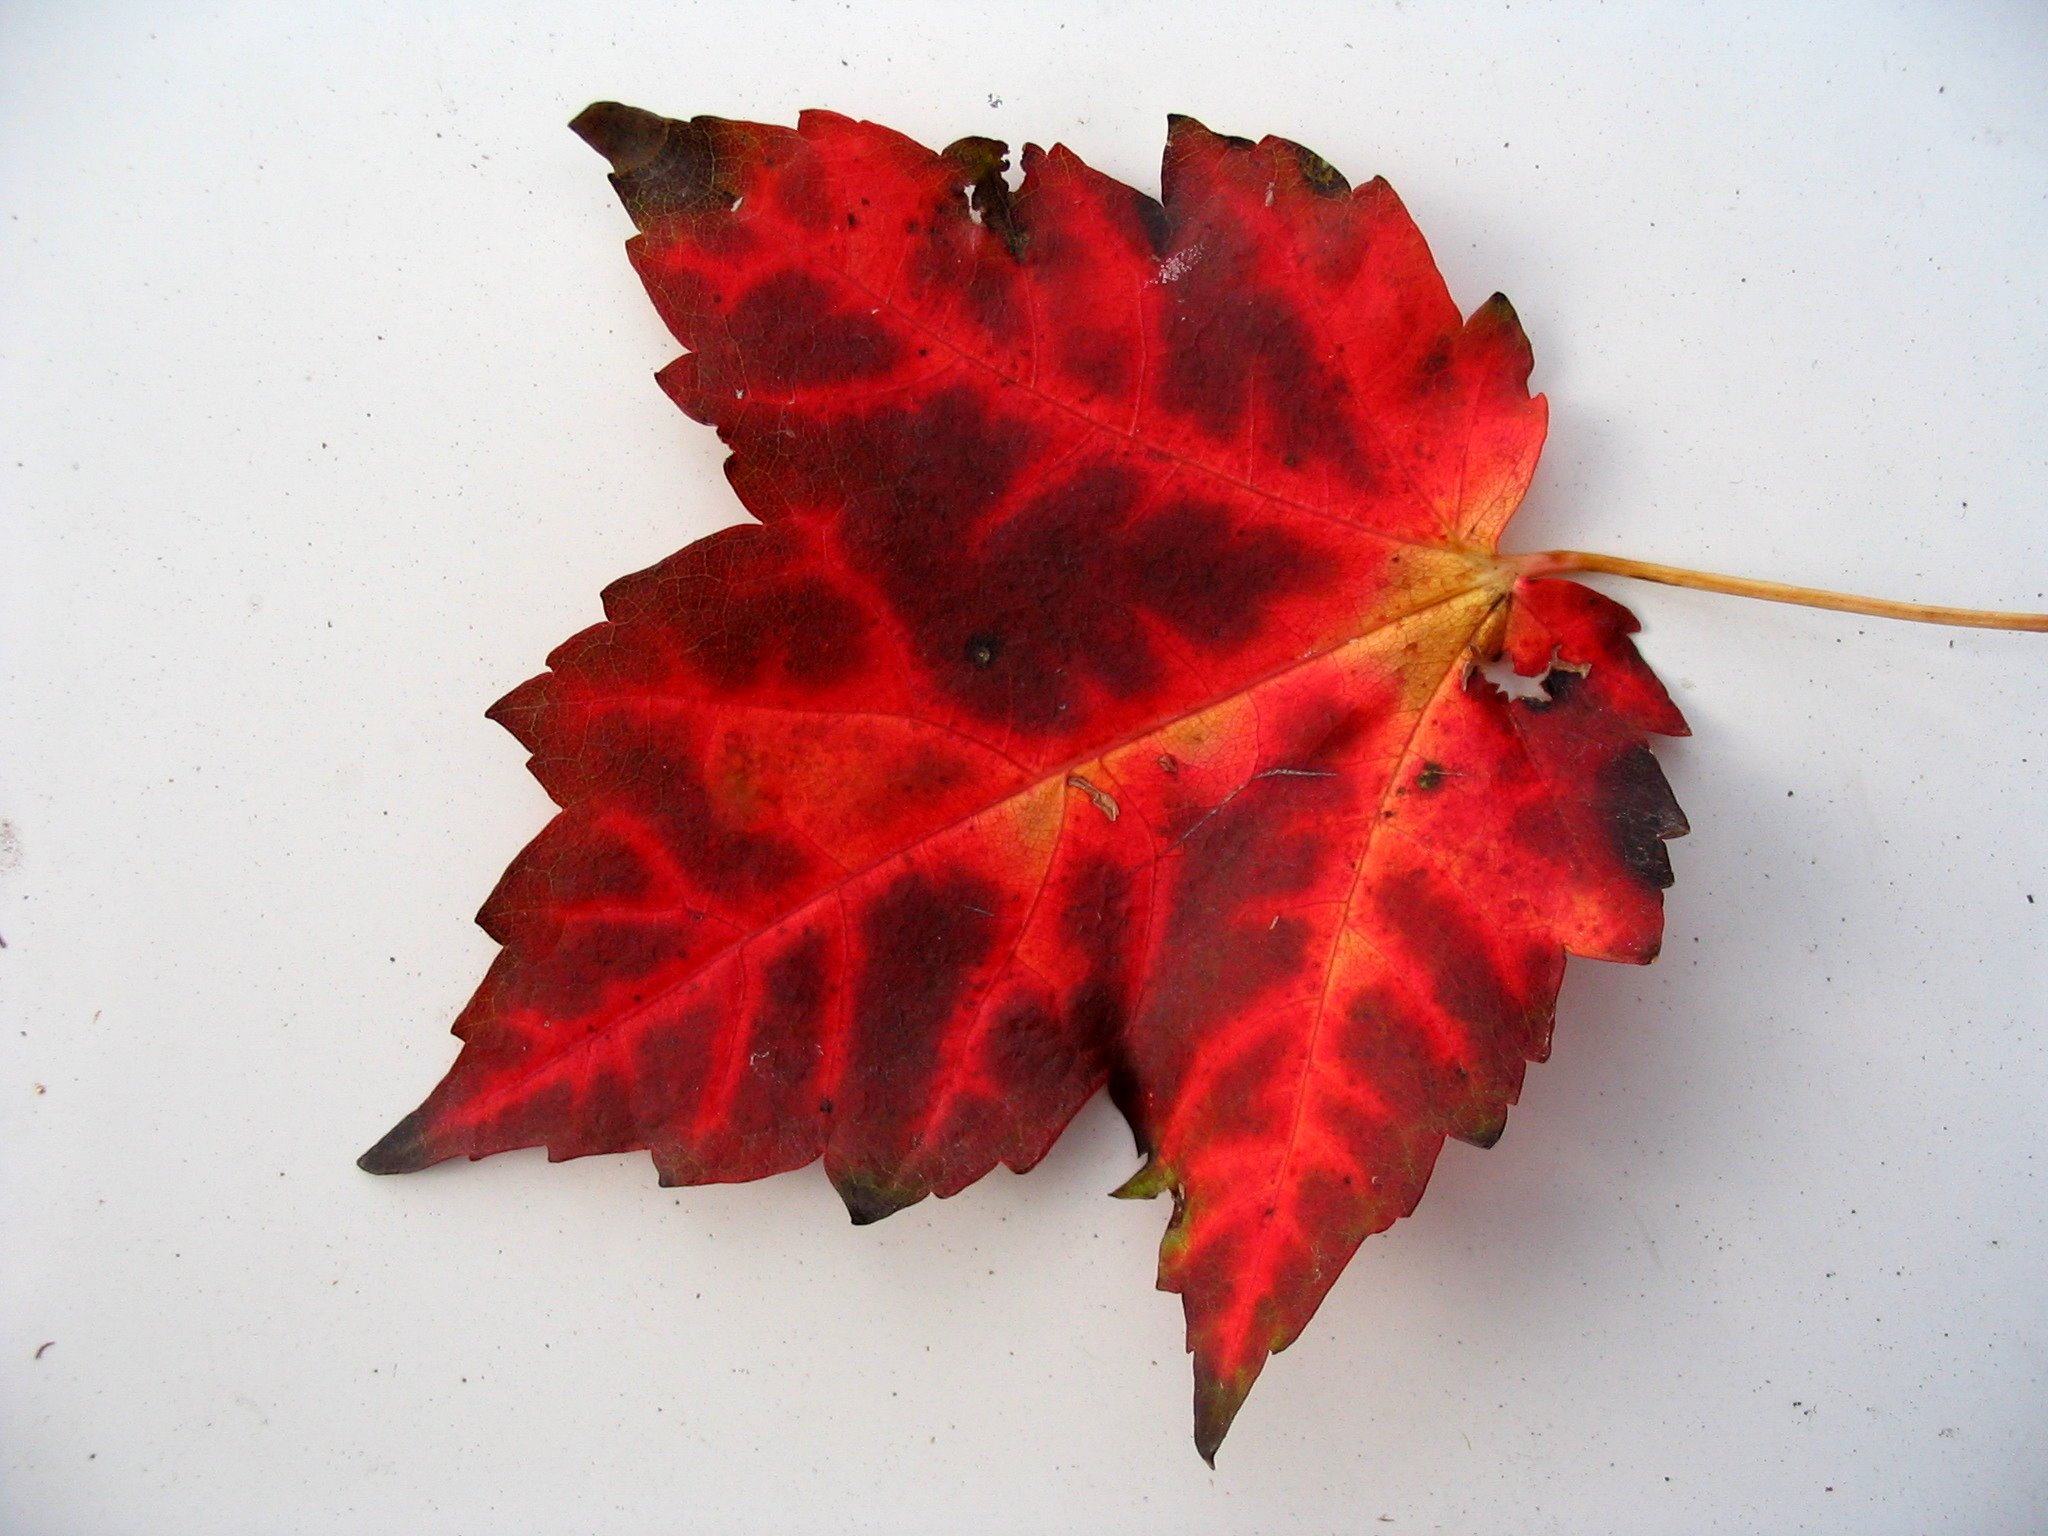 Archivo:Red maple leaf with veining.jpg - Wikipedia, la enciclopedia libre